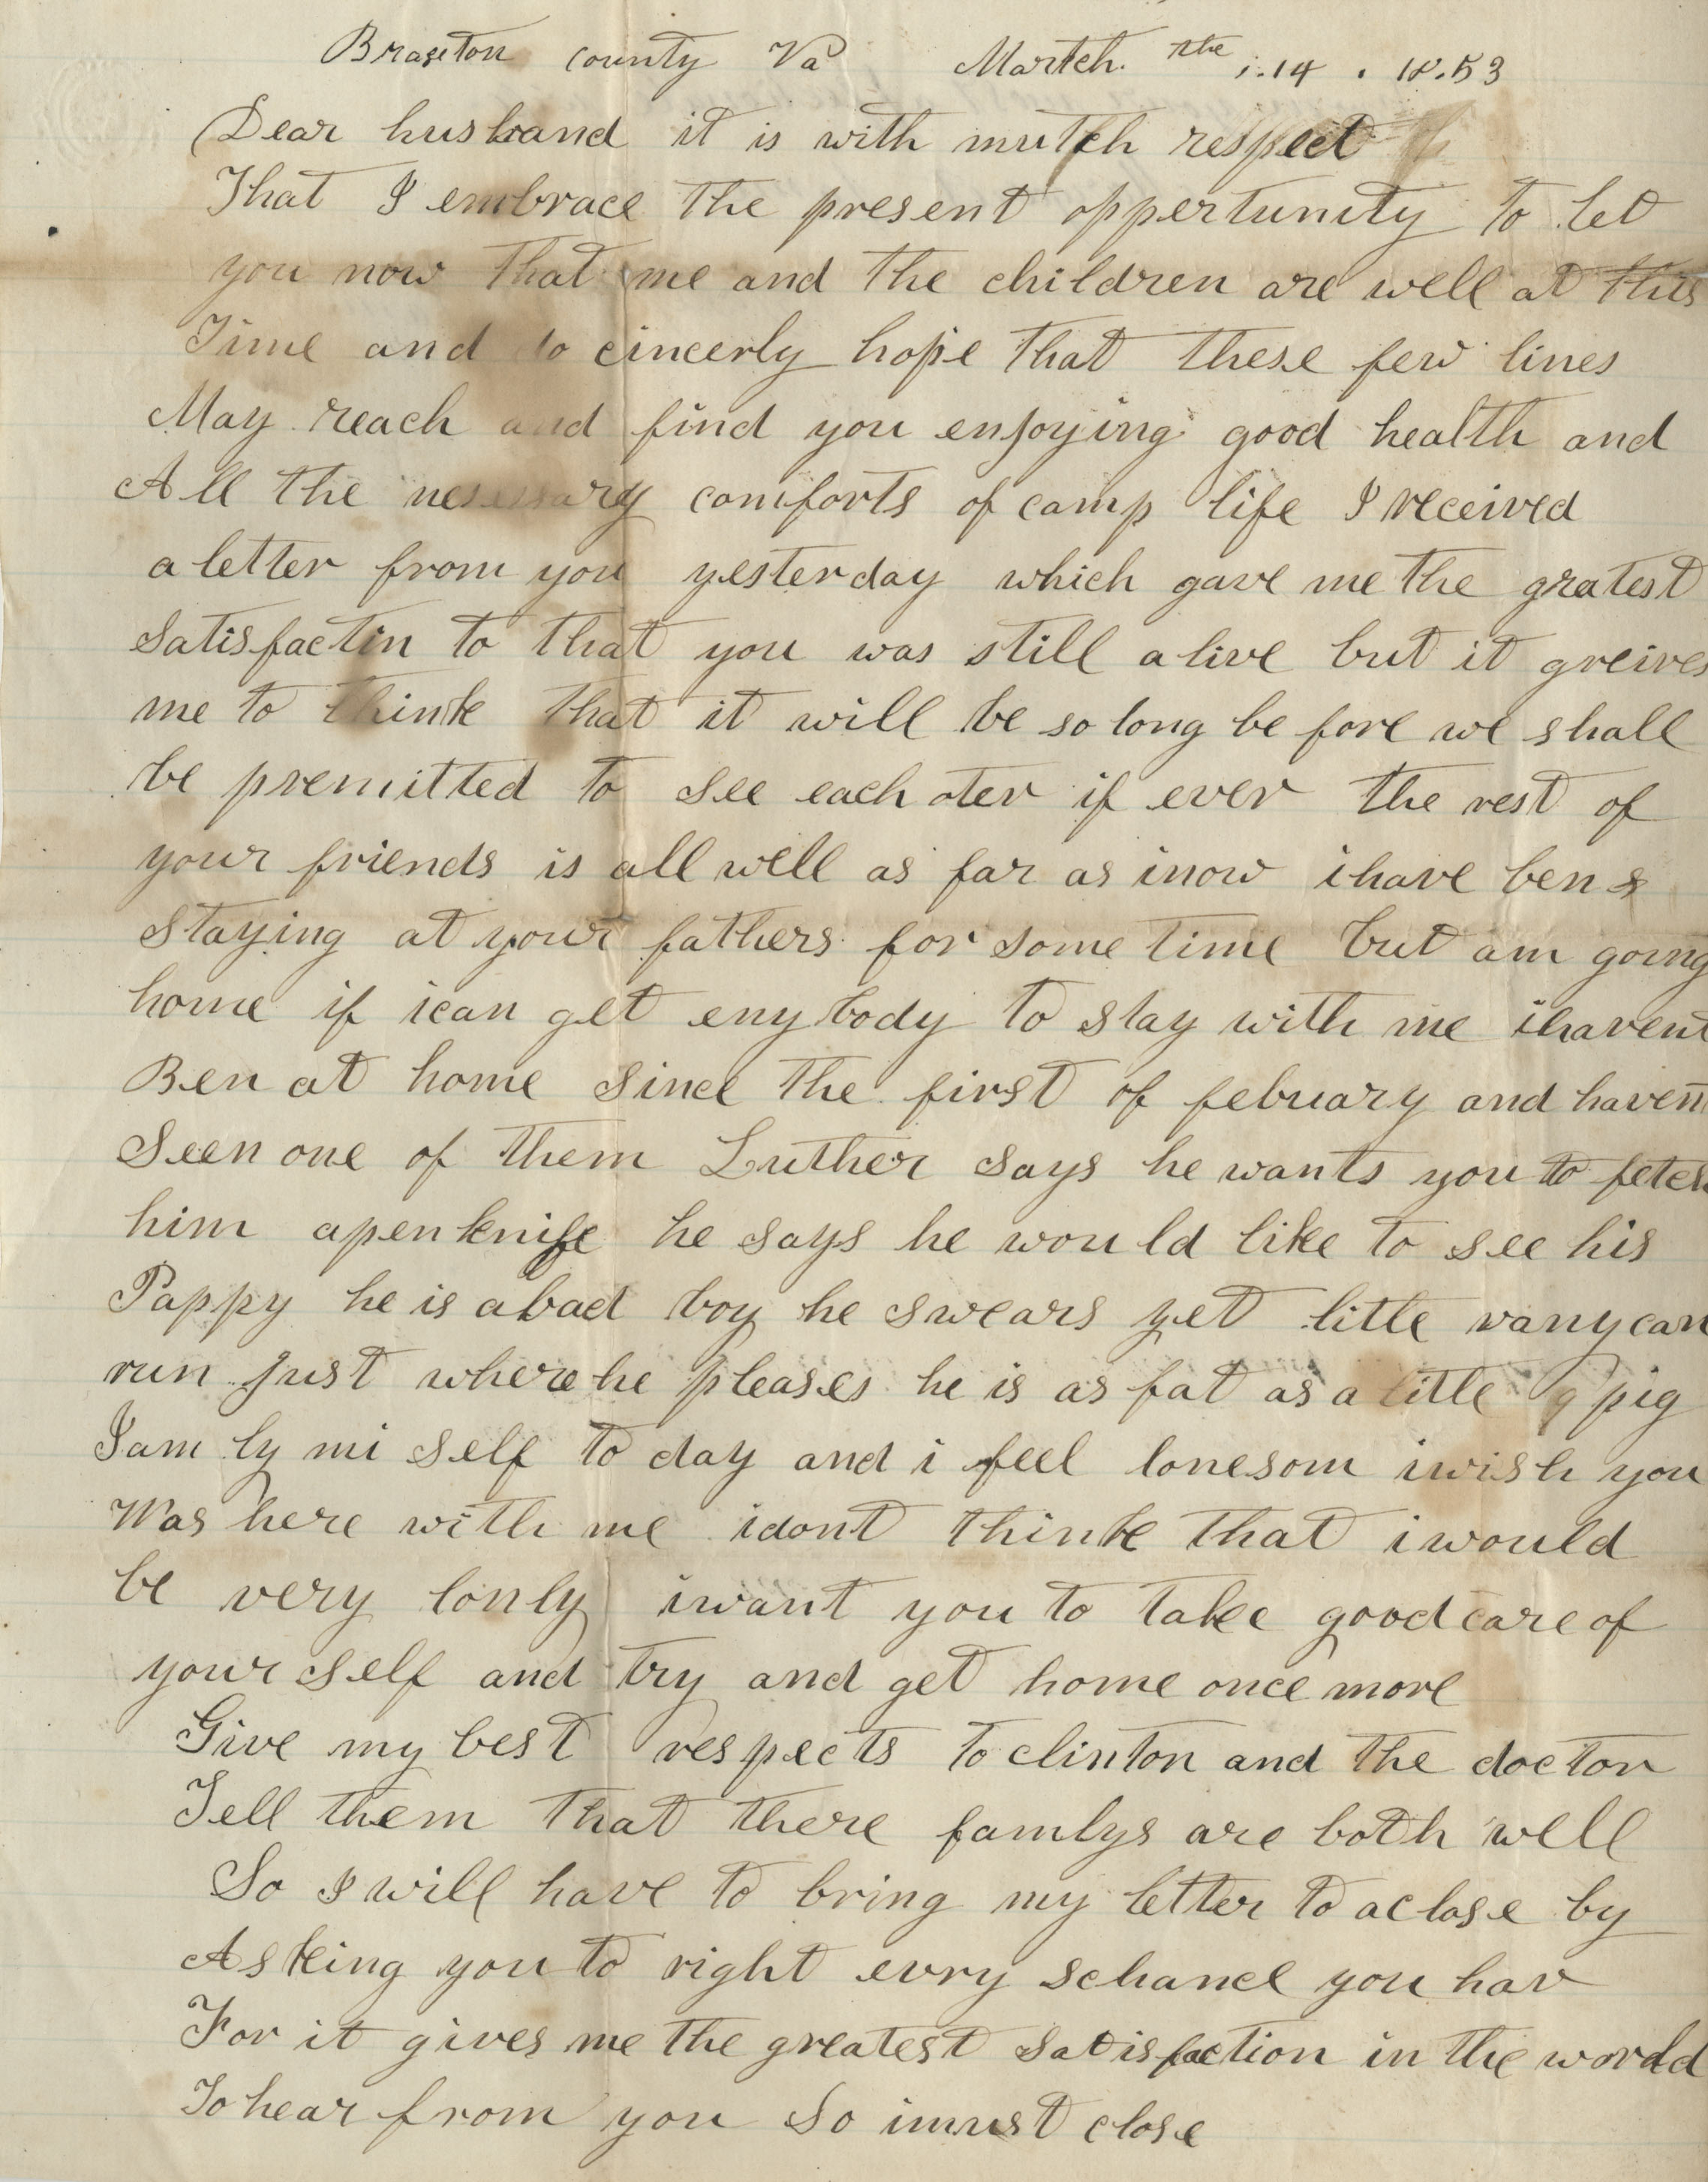 Margaret James' 1863 letter to her husband speaks of her concern and loneliness.